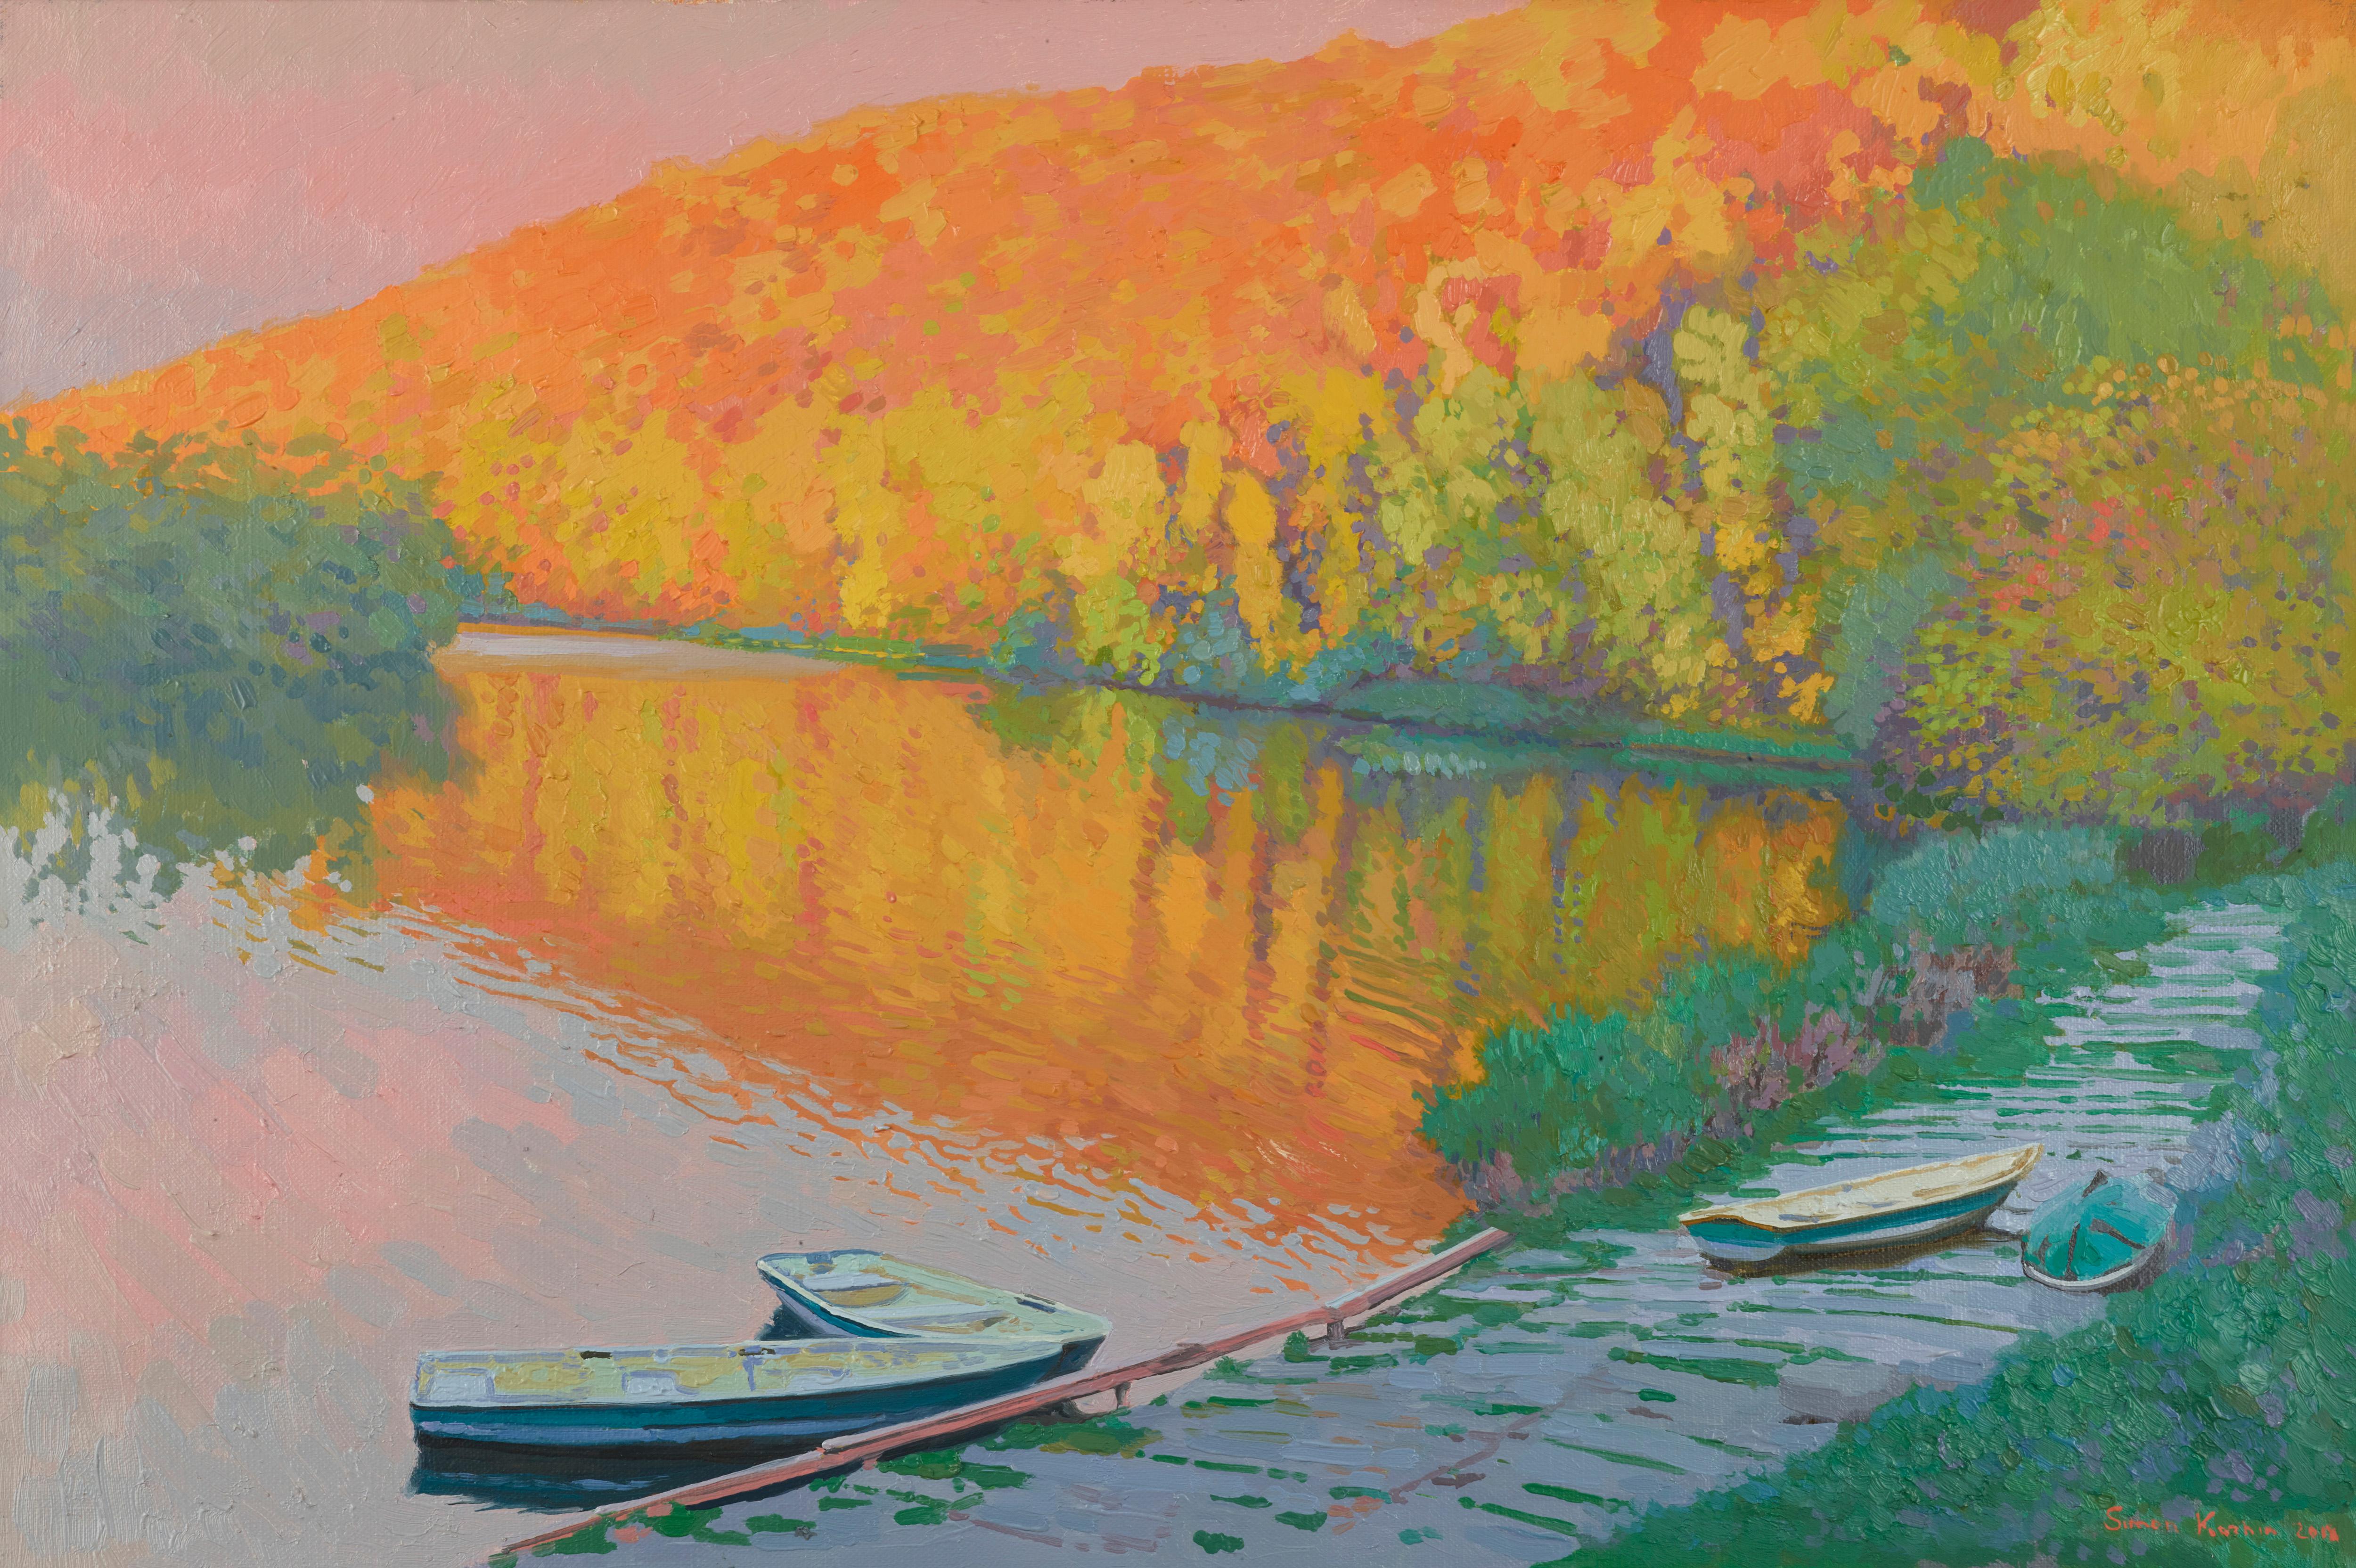 Simon Kozhin Landscape Painting - Sunset Landscape Forest and Water with Boats, Krasivaya mecha river painting